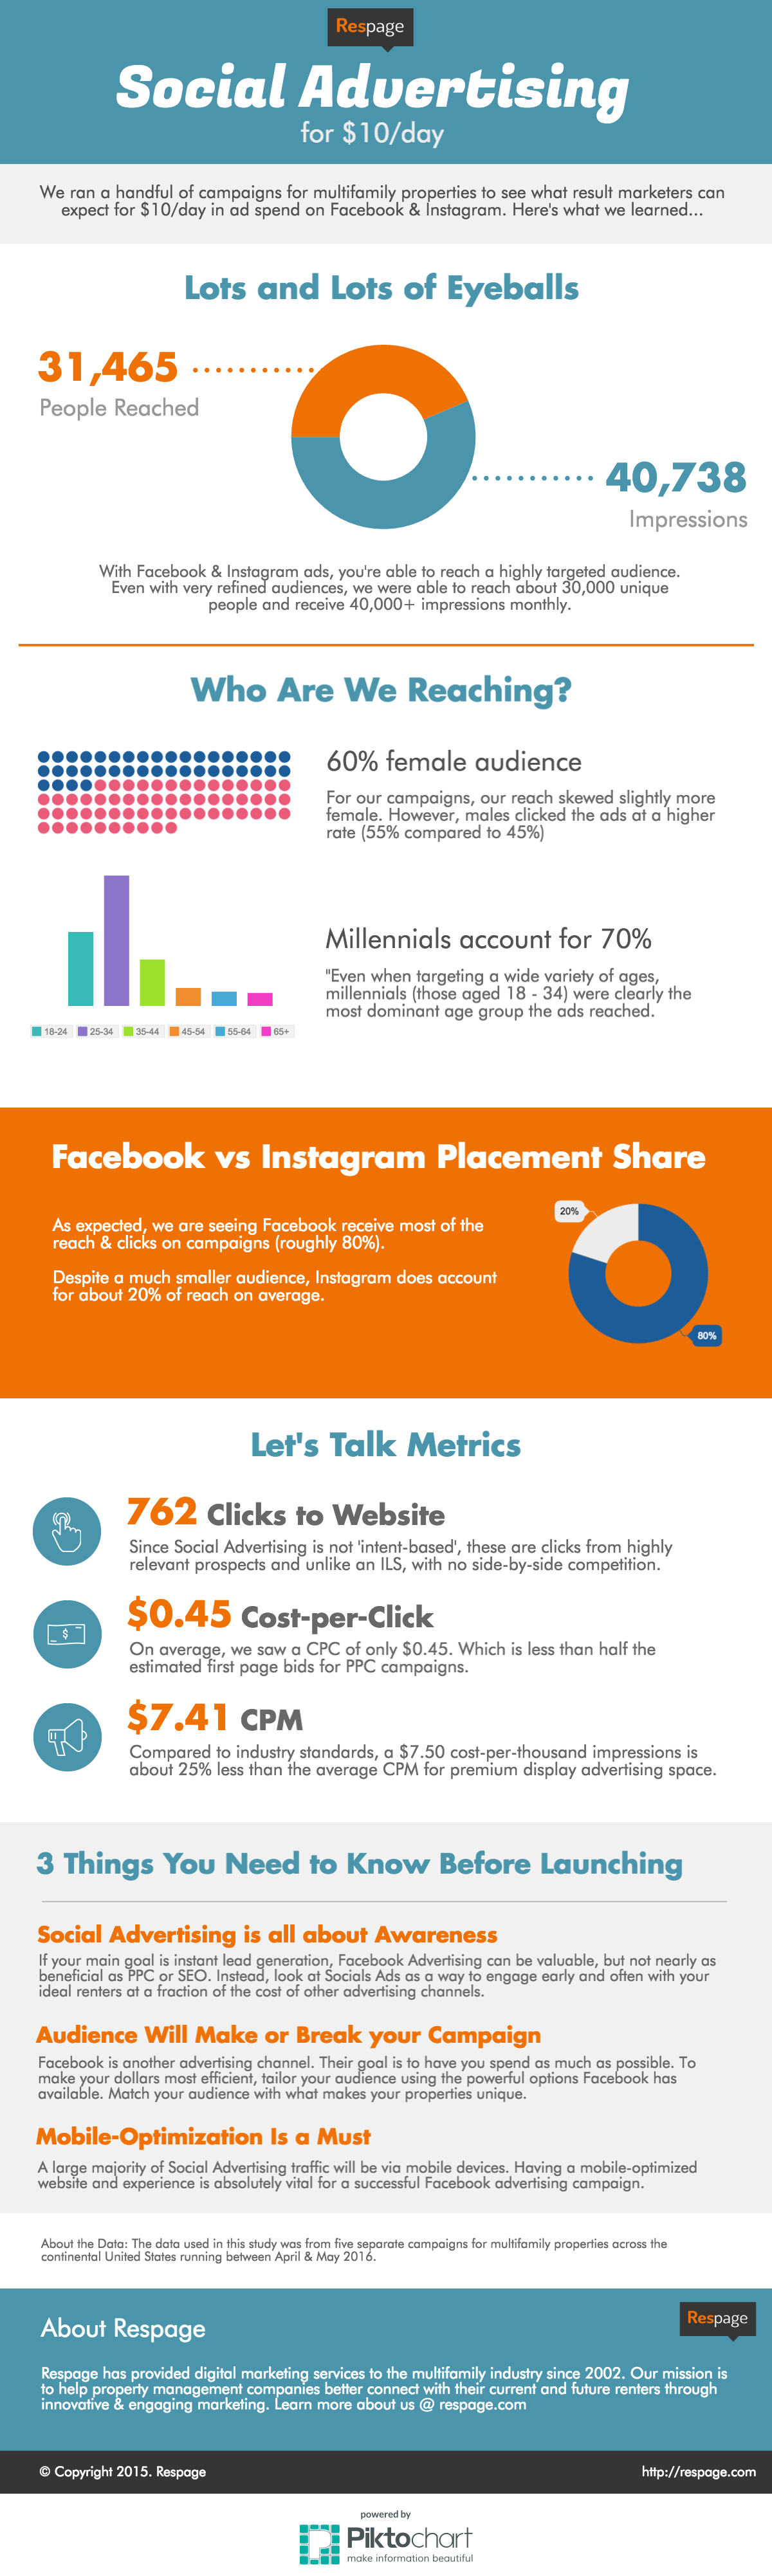 respage-social-ads-infographic-2016-v1